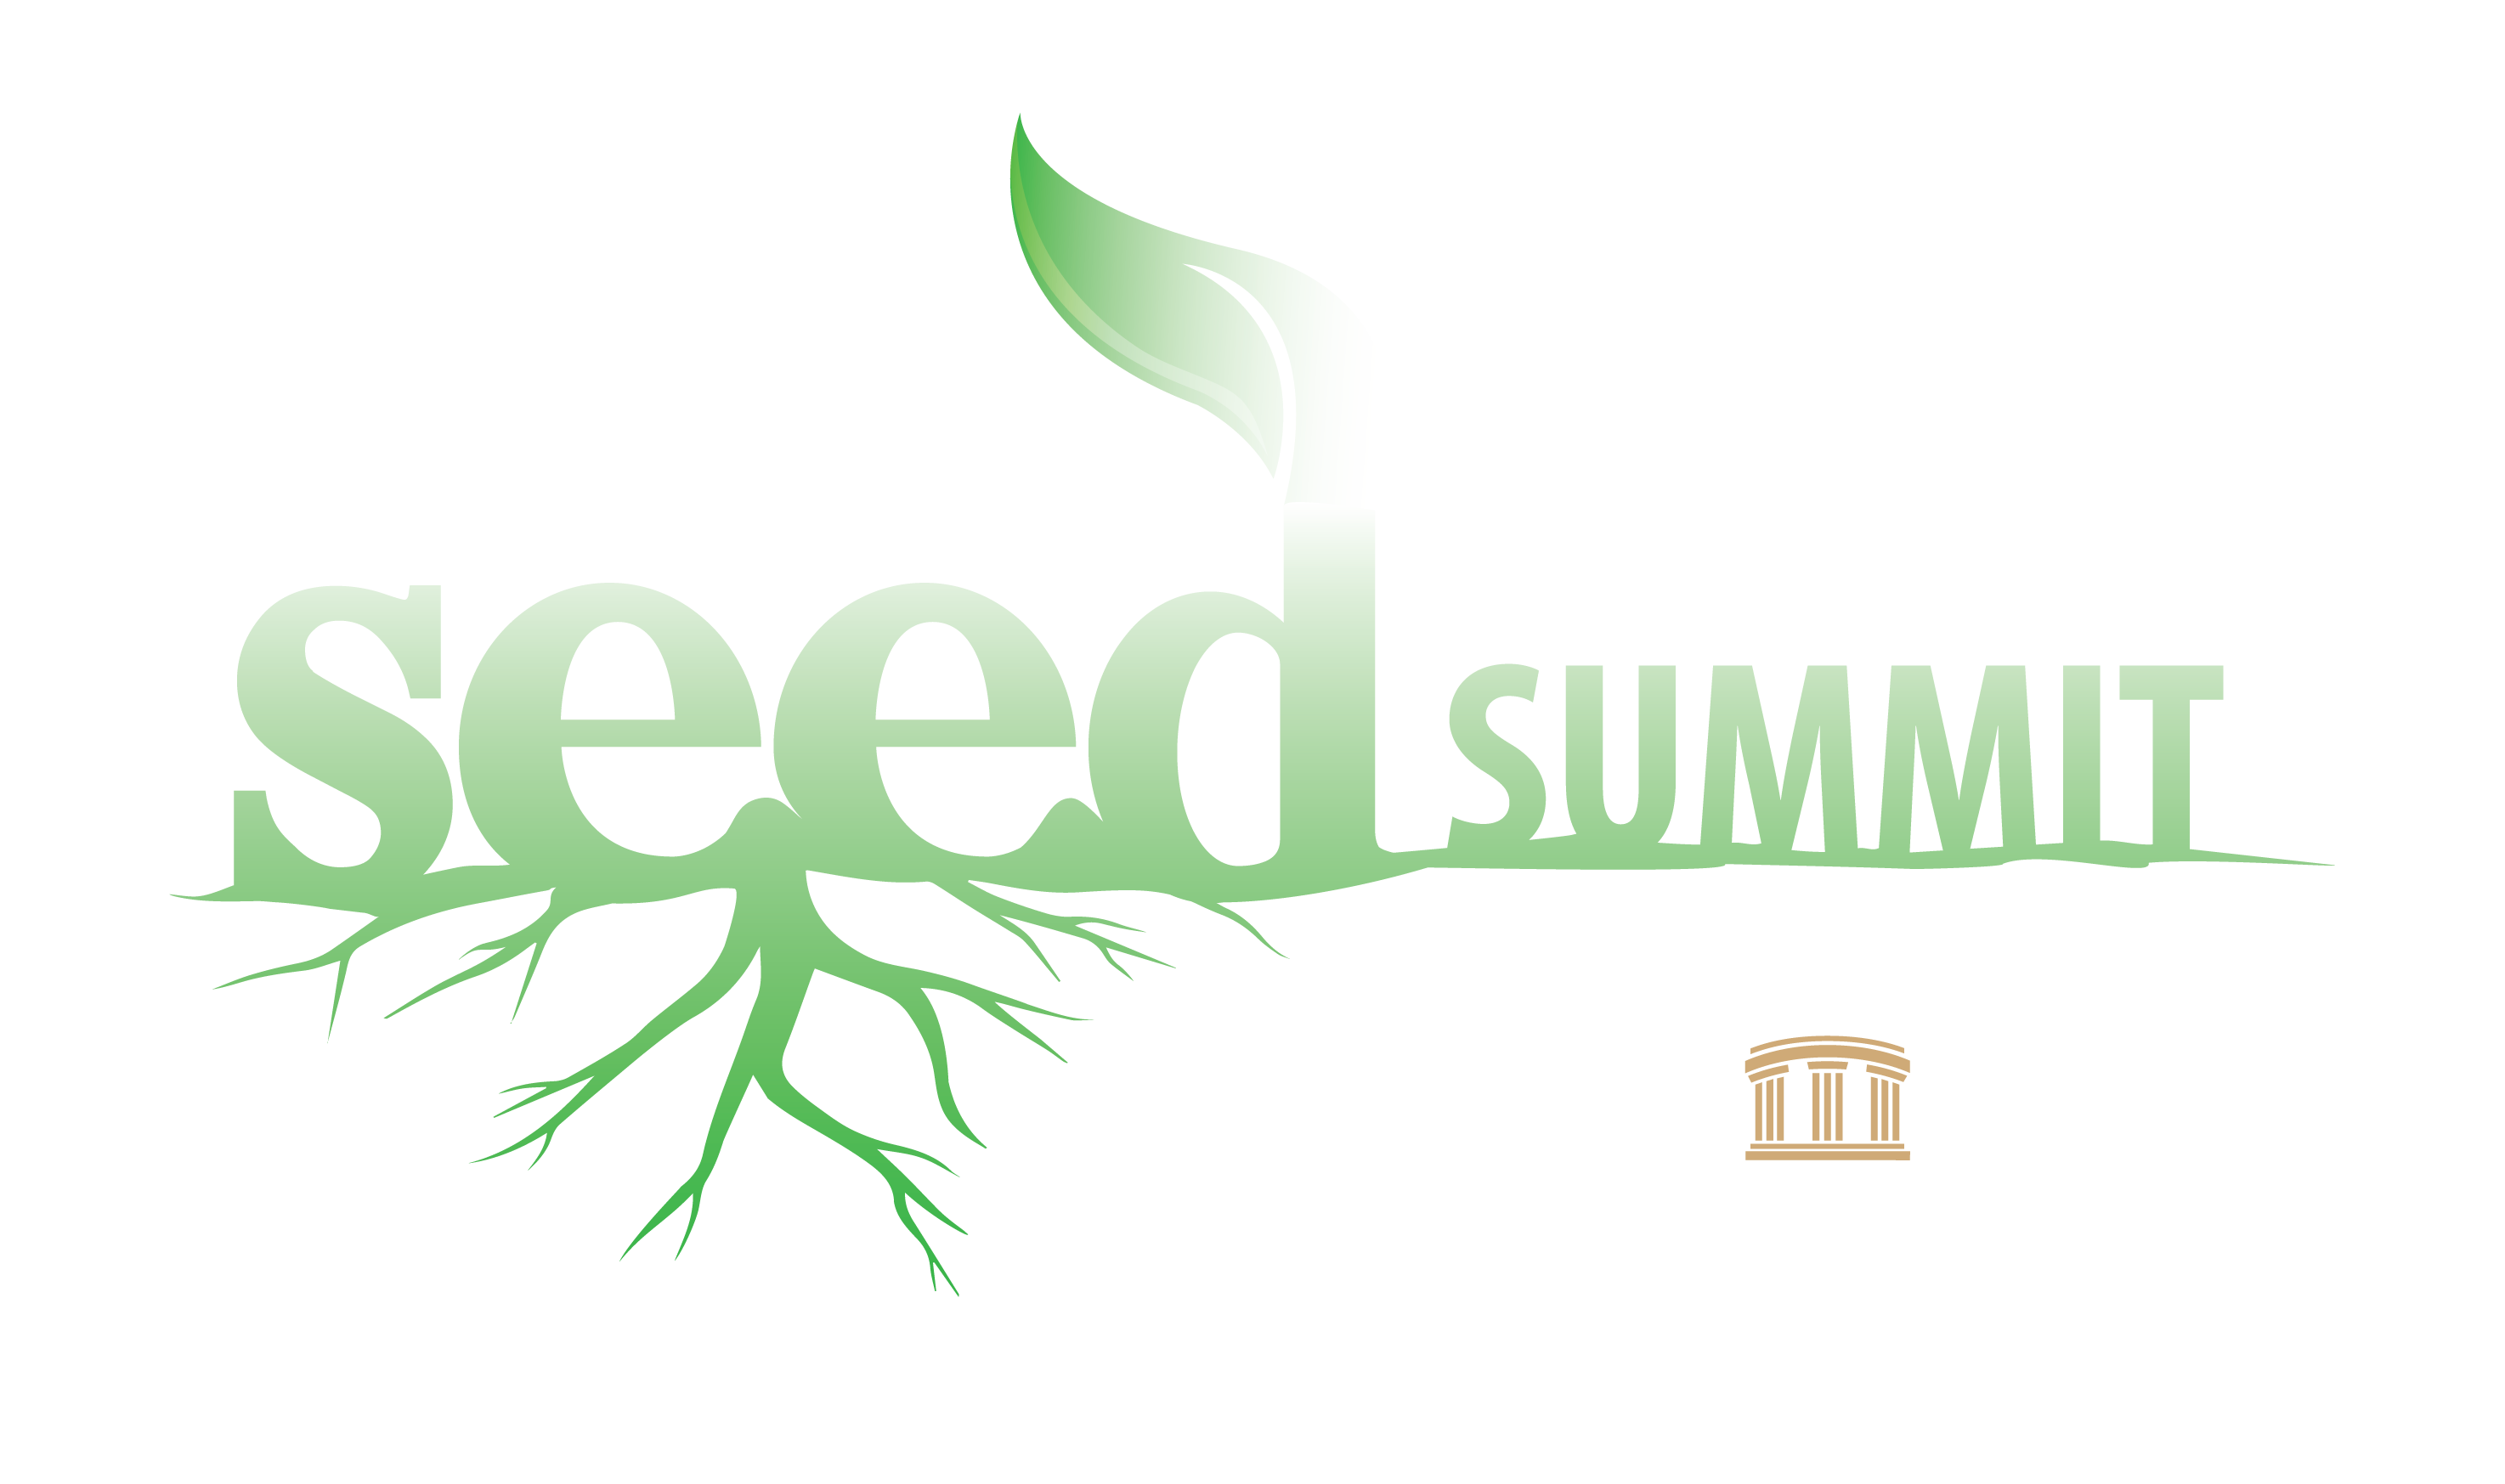 SEED Program Logo_Summit-04